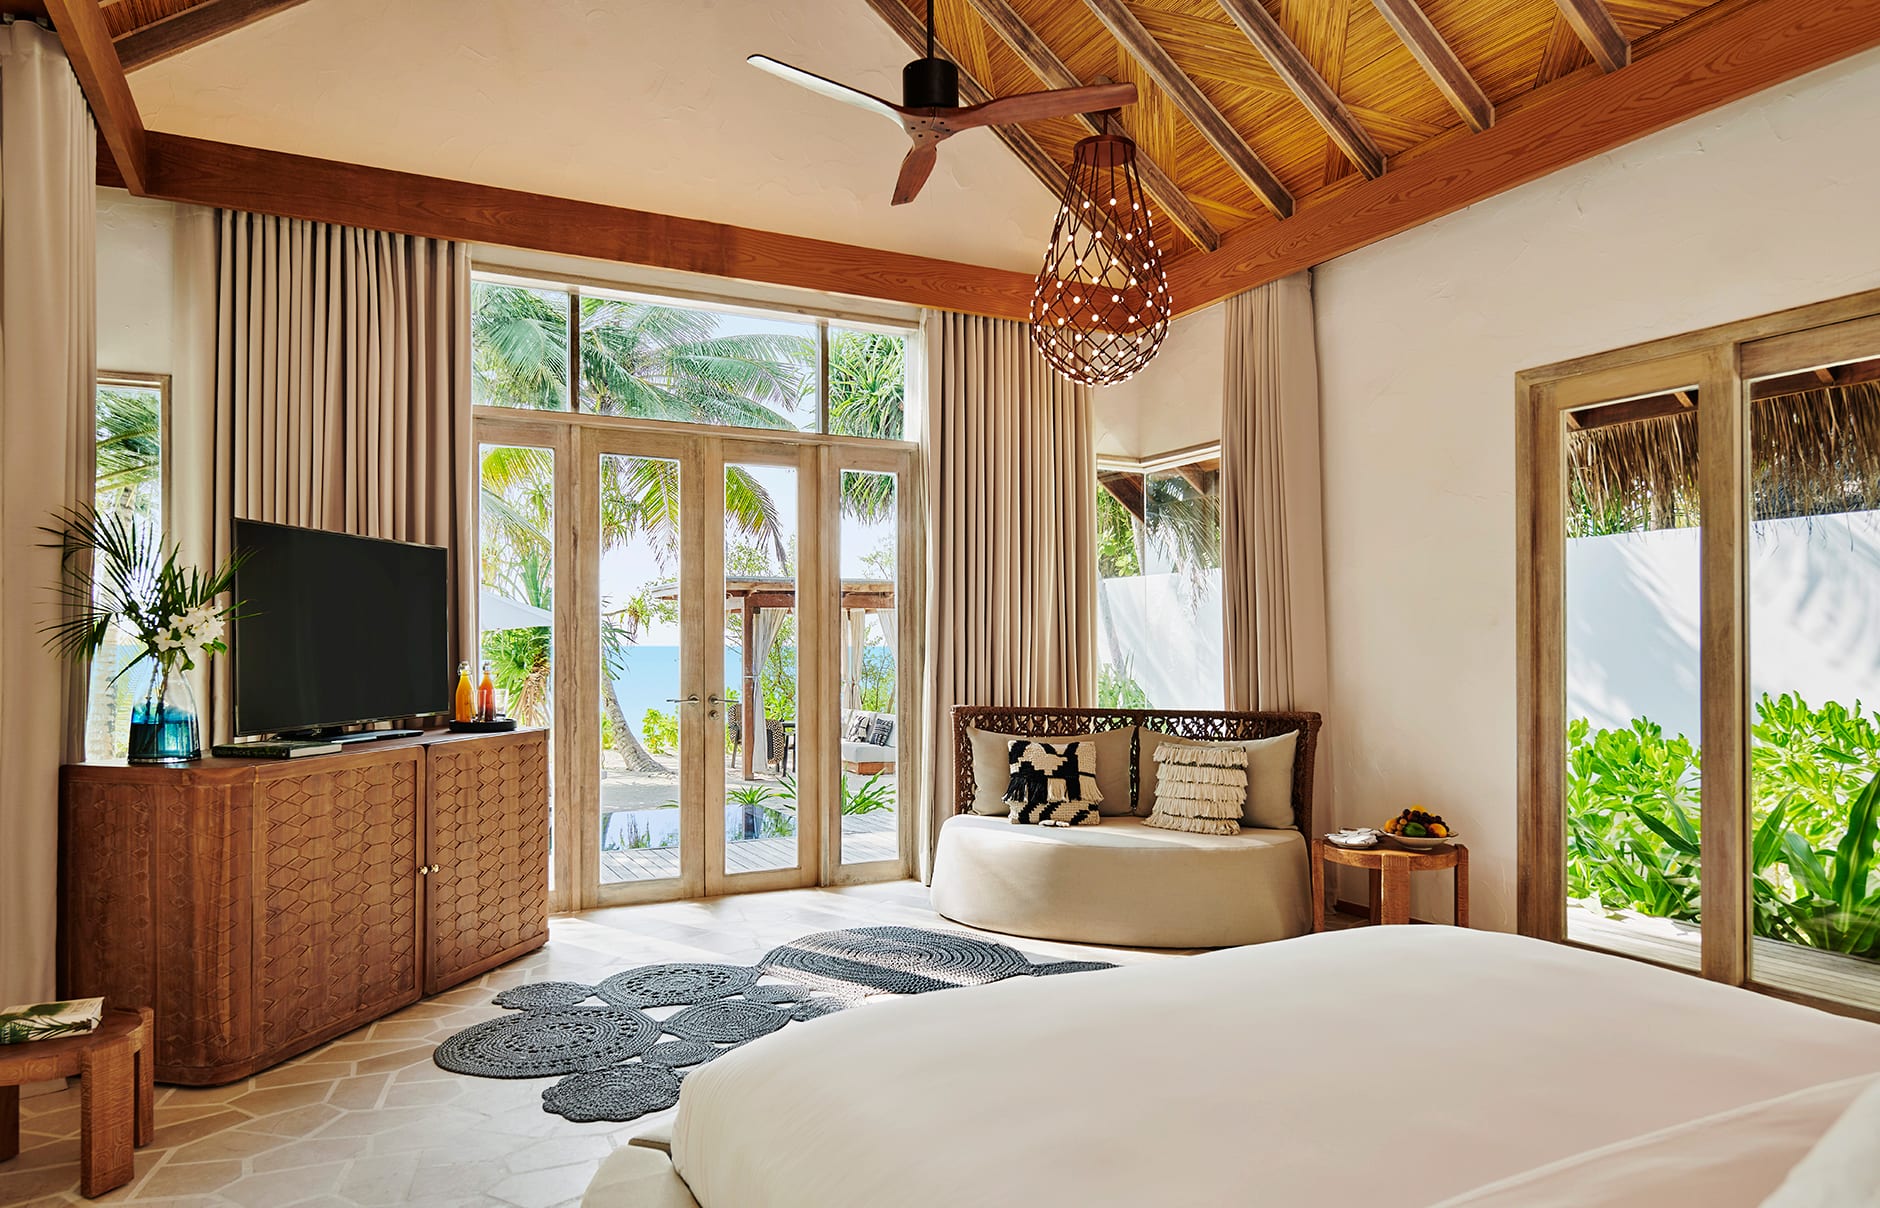 Fairmont Maldives, Sirru Fen Fushi • Hotel Review by TravelPlusStyle